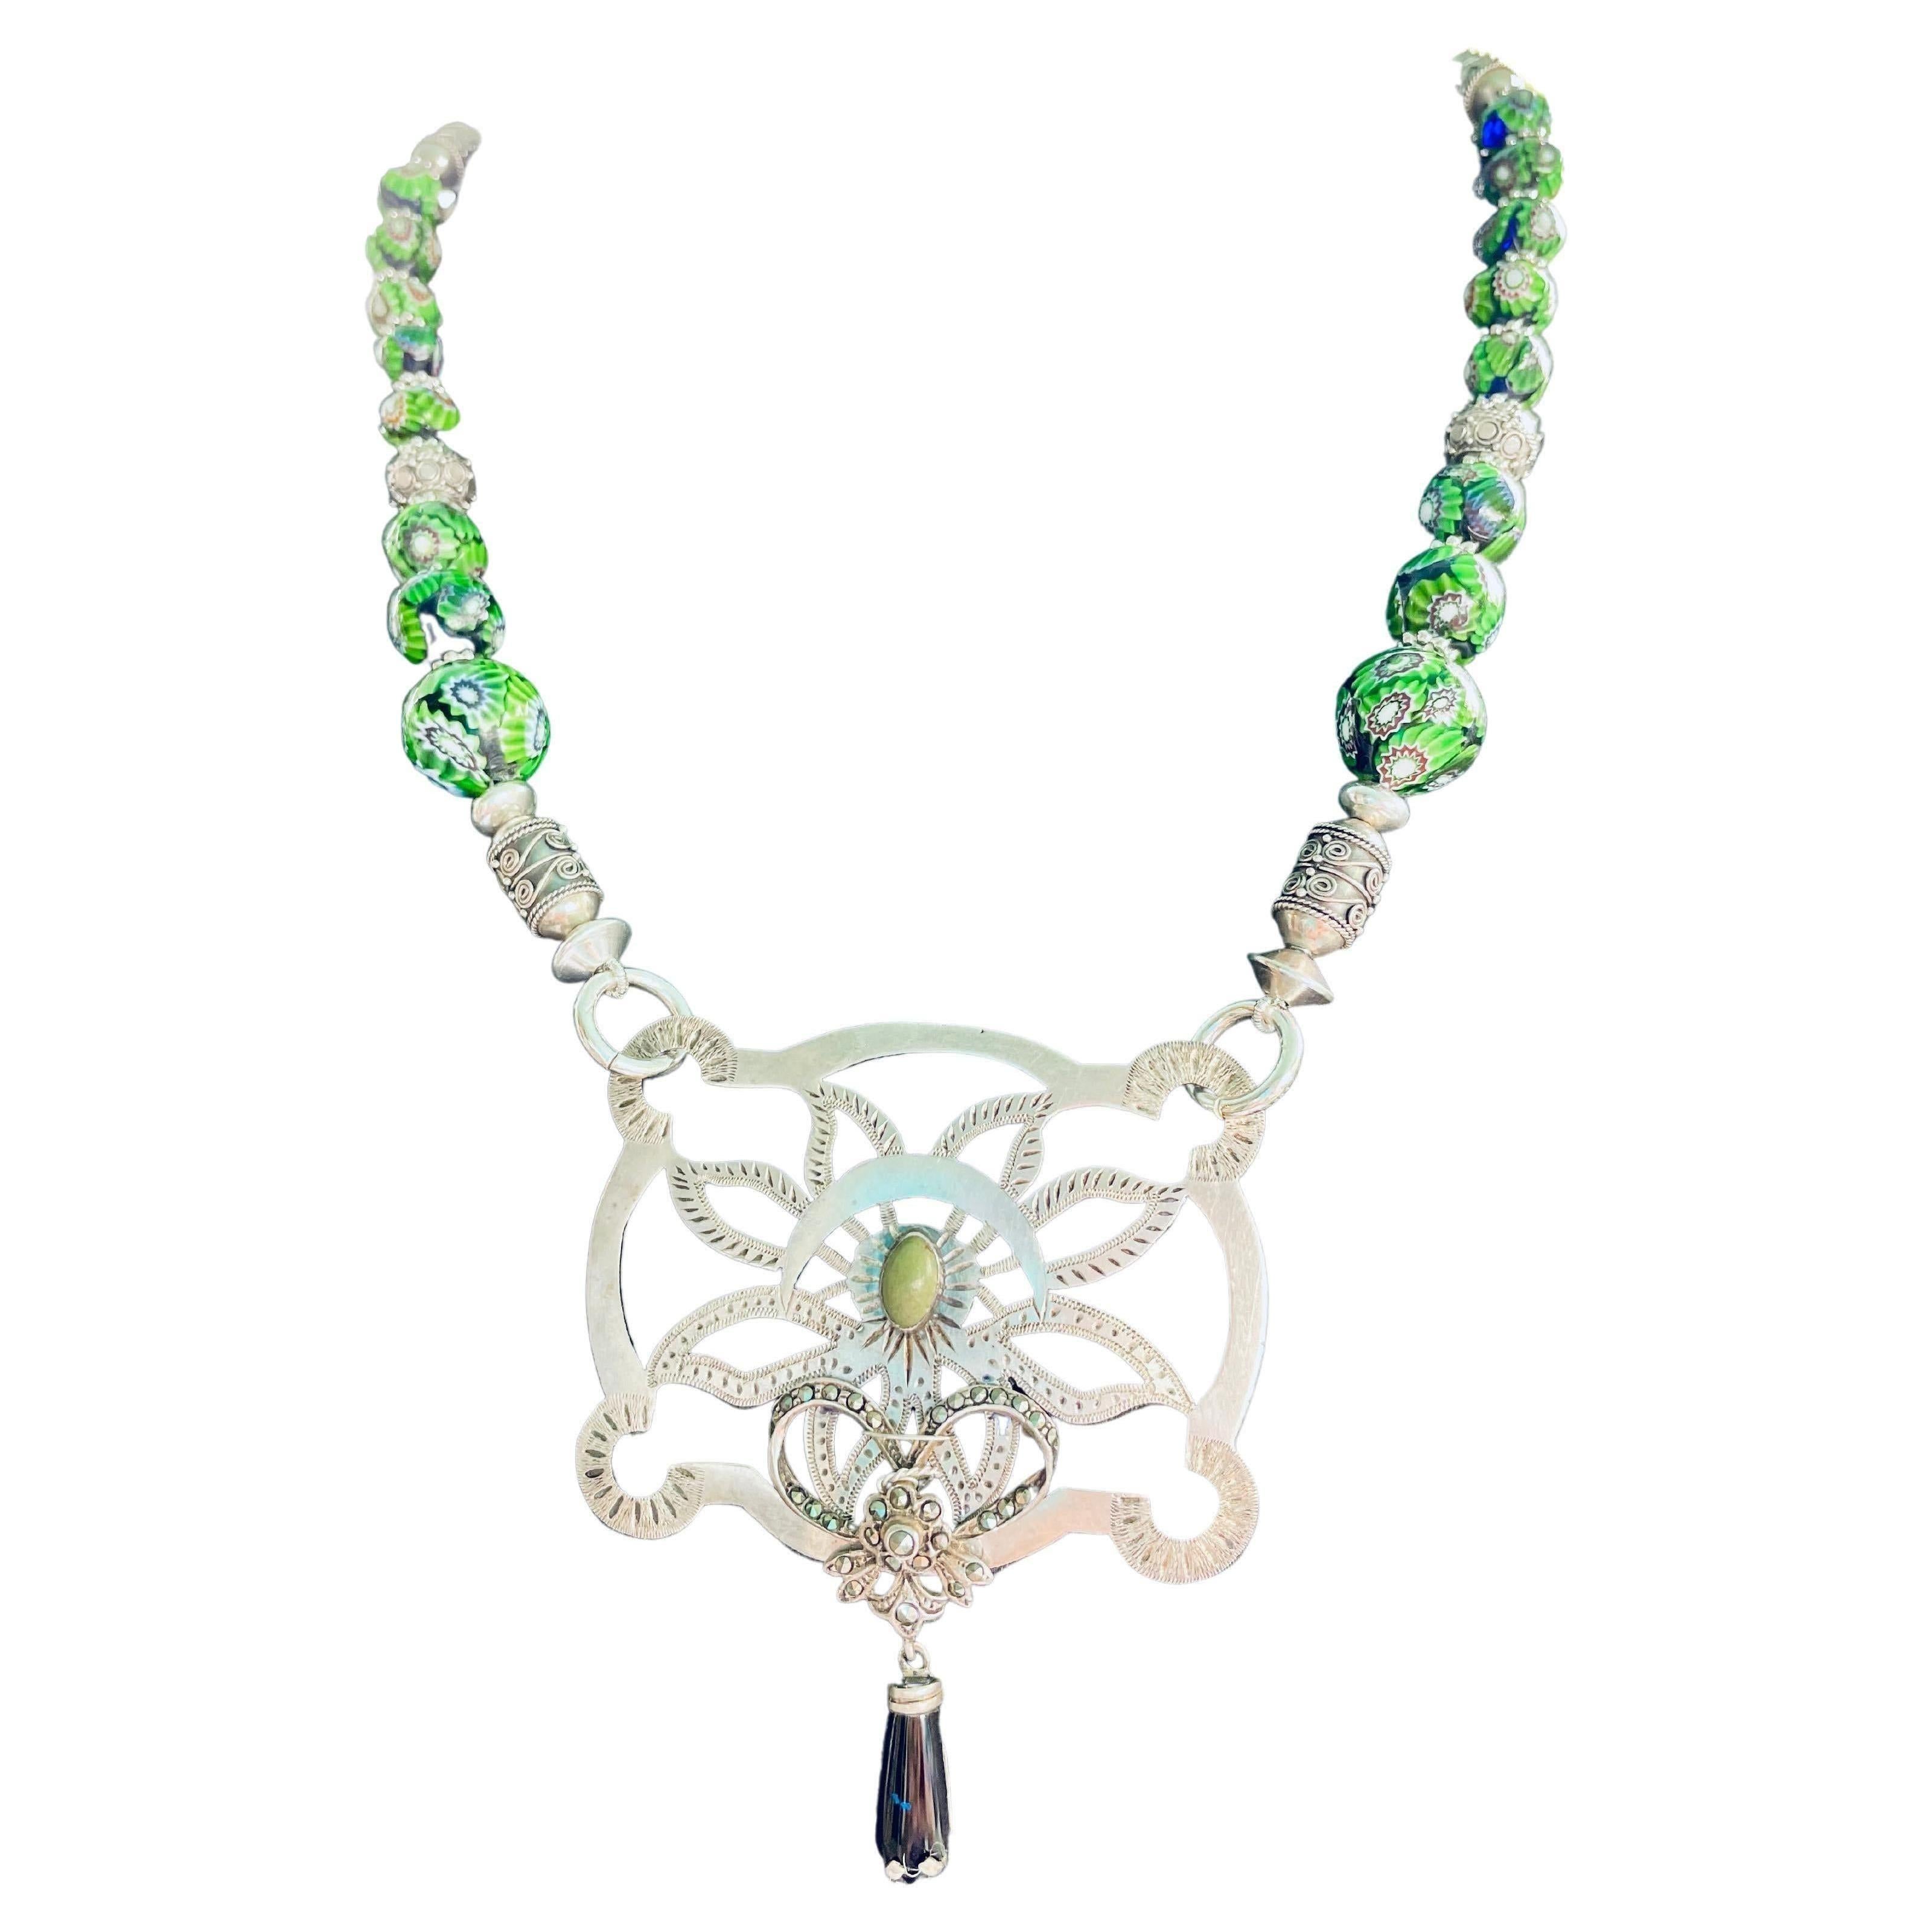 Lorraine’s Bijoux presents a one of a kind Art Deco pendant on Venetian beads